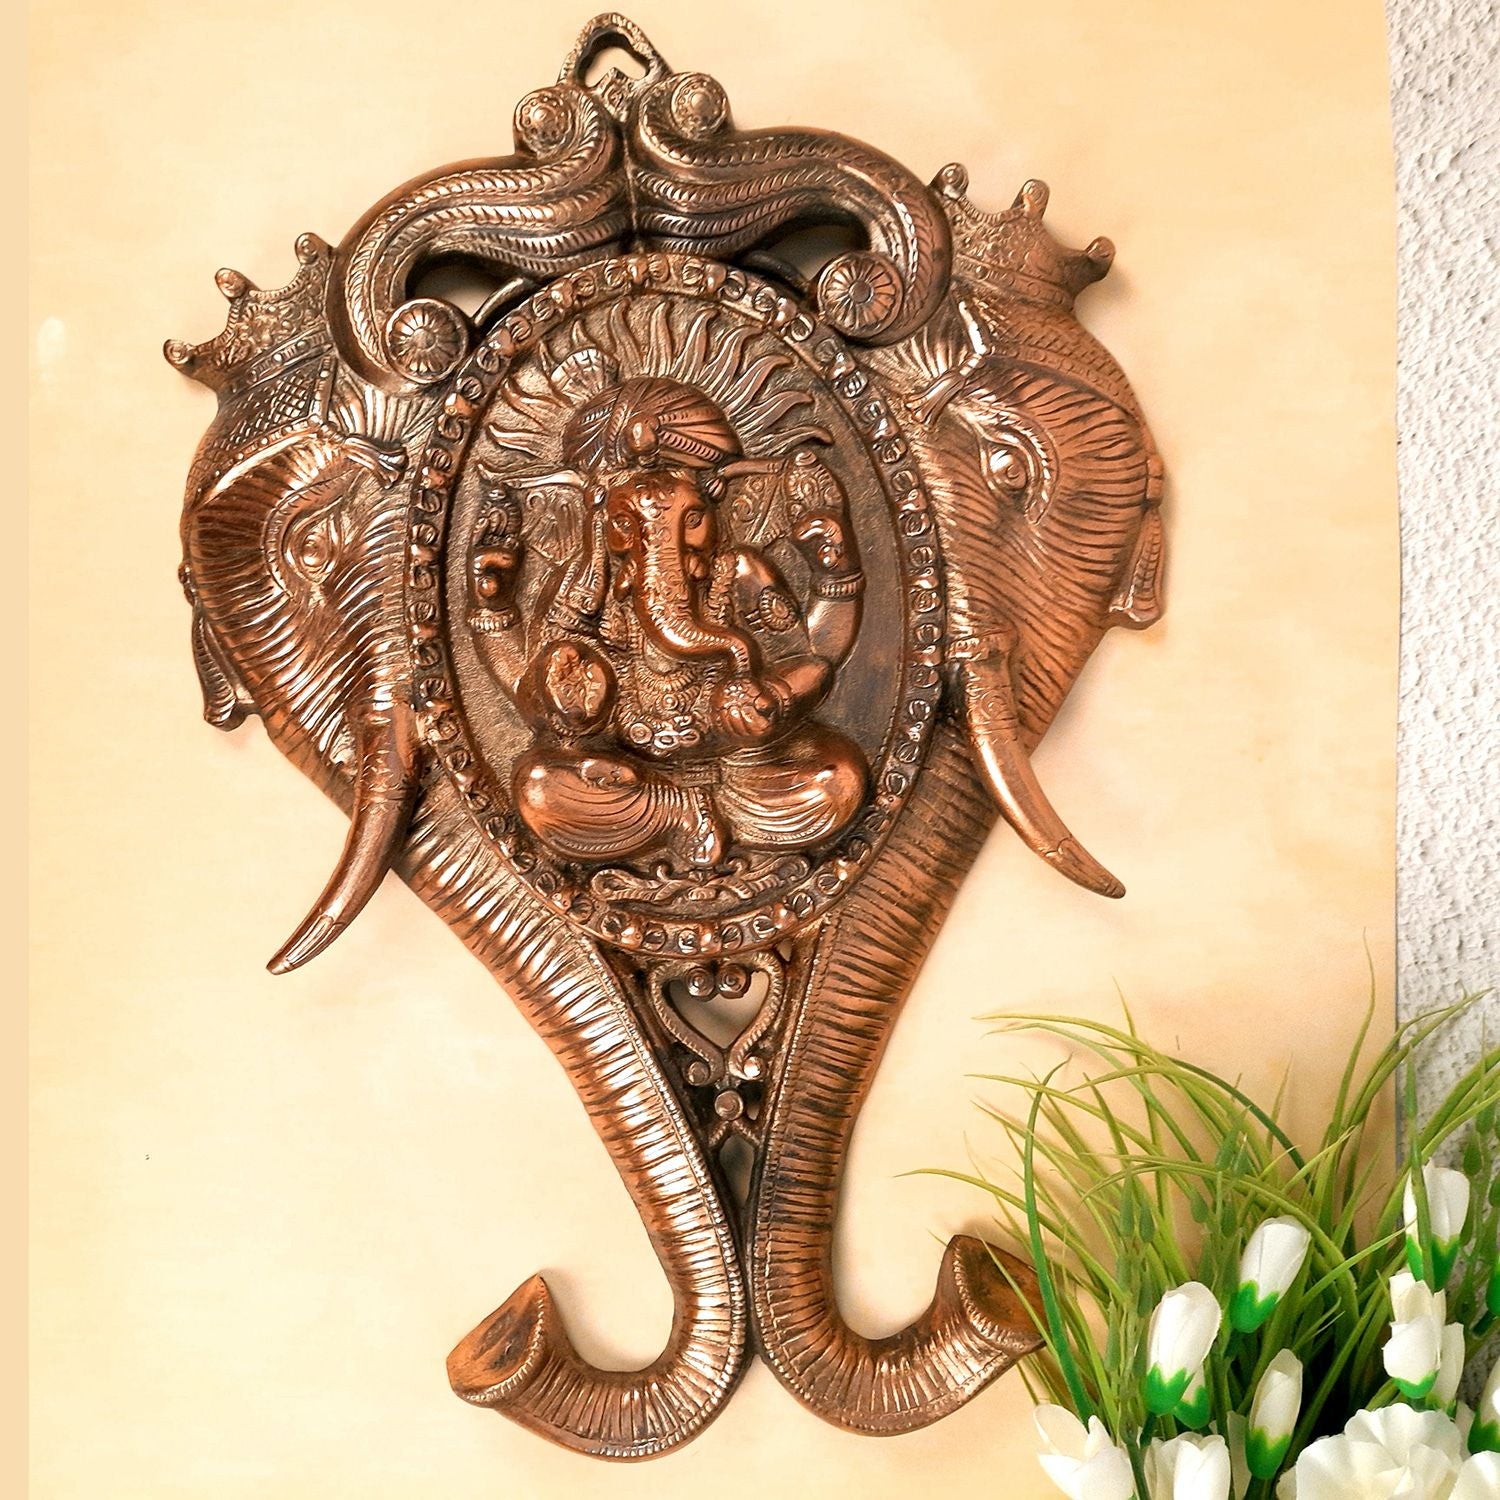 Ganesh Idol Wall Hanging | Lord Ganesha Wall Statue Decor |Religoius & Spiritual Wall Art - For Puja, Home & Entrance Living Room & Gift - 23 Inch - apkamart